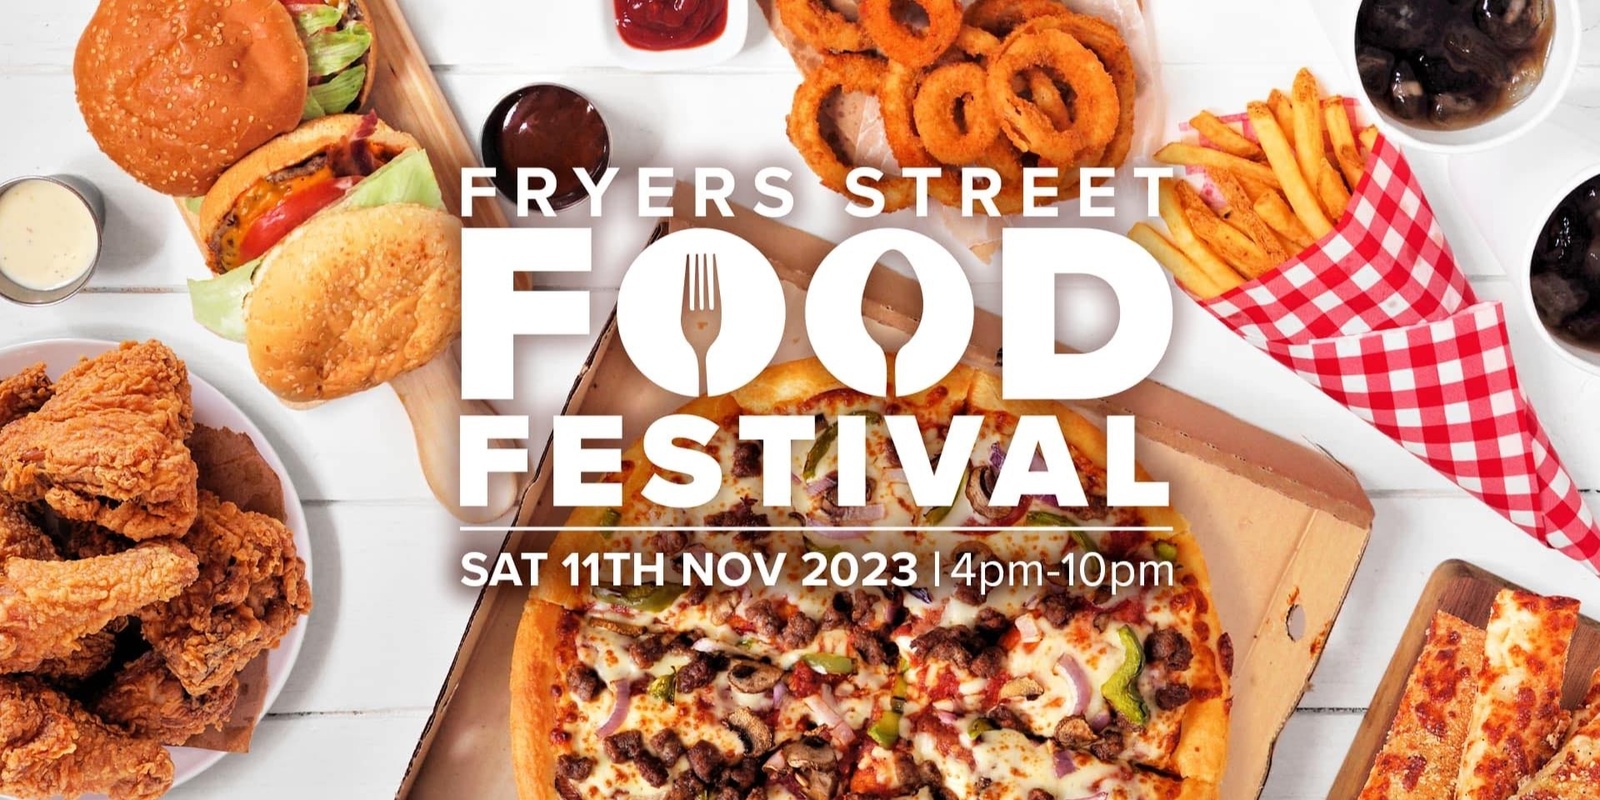 Banner image for Fryers Street Food Festival 2023